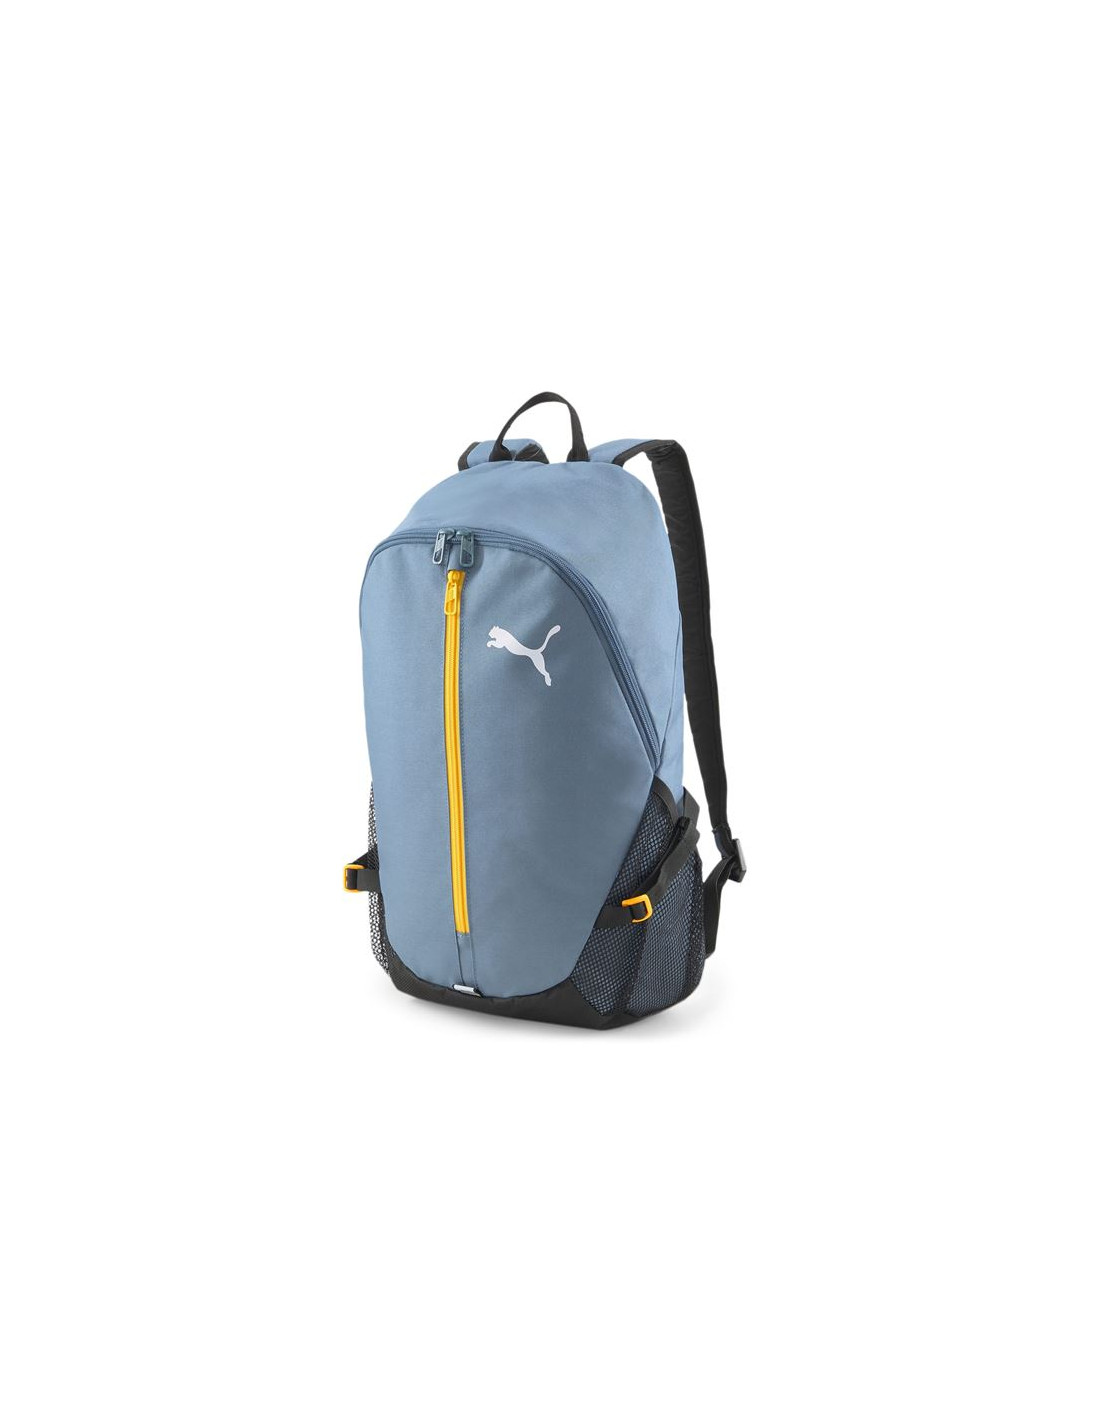 Mochila puma plus backpack blue